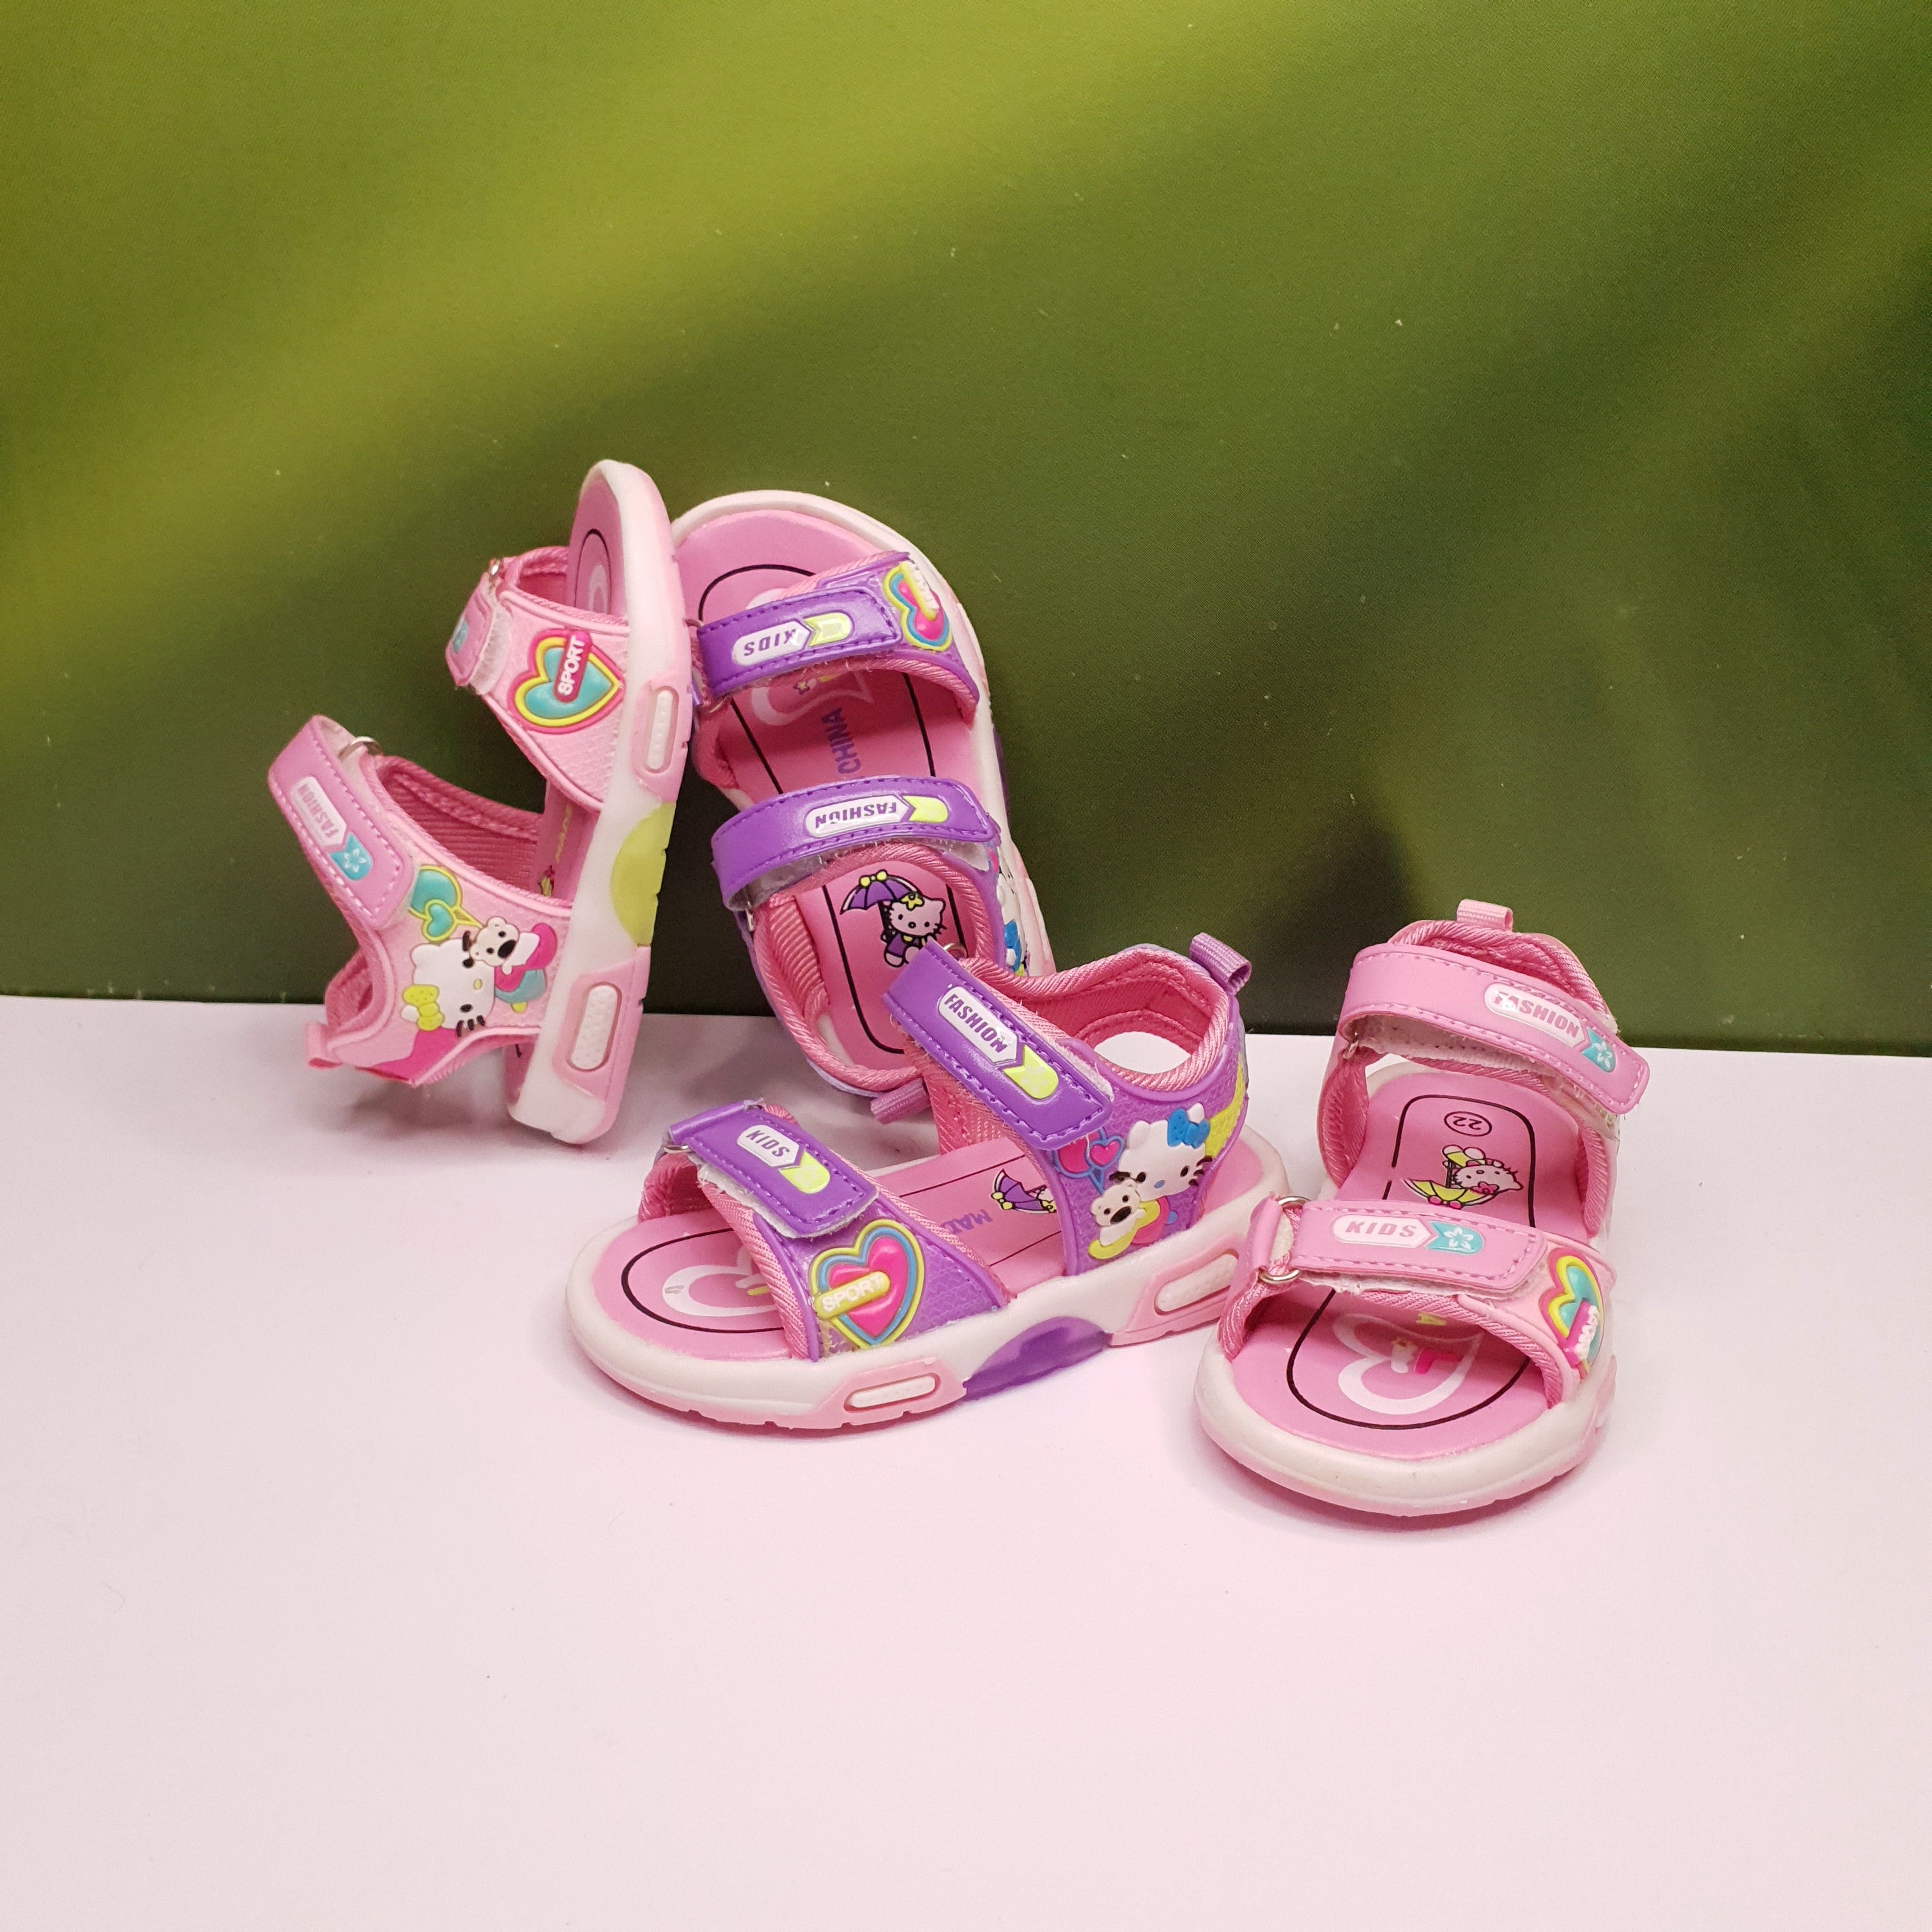 Kids Footwear 821 - Maha fashions -  Kids Footwear